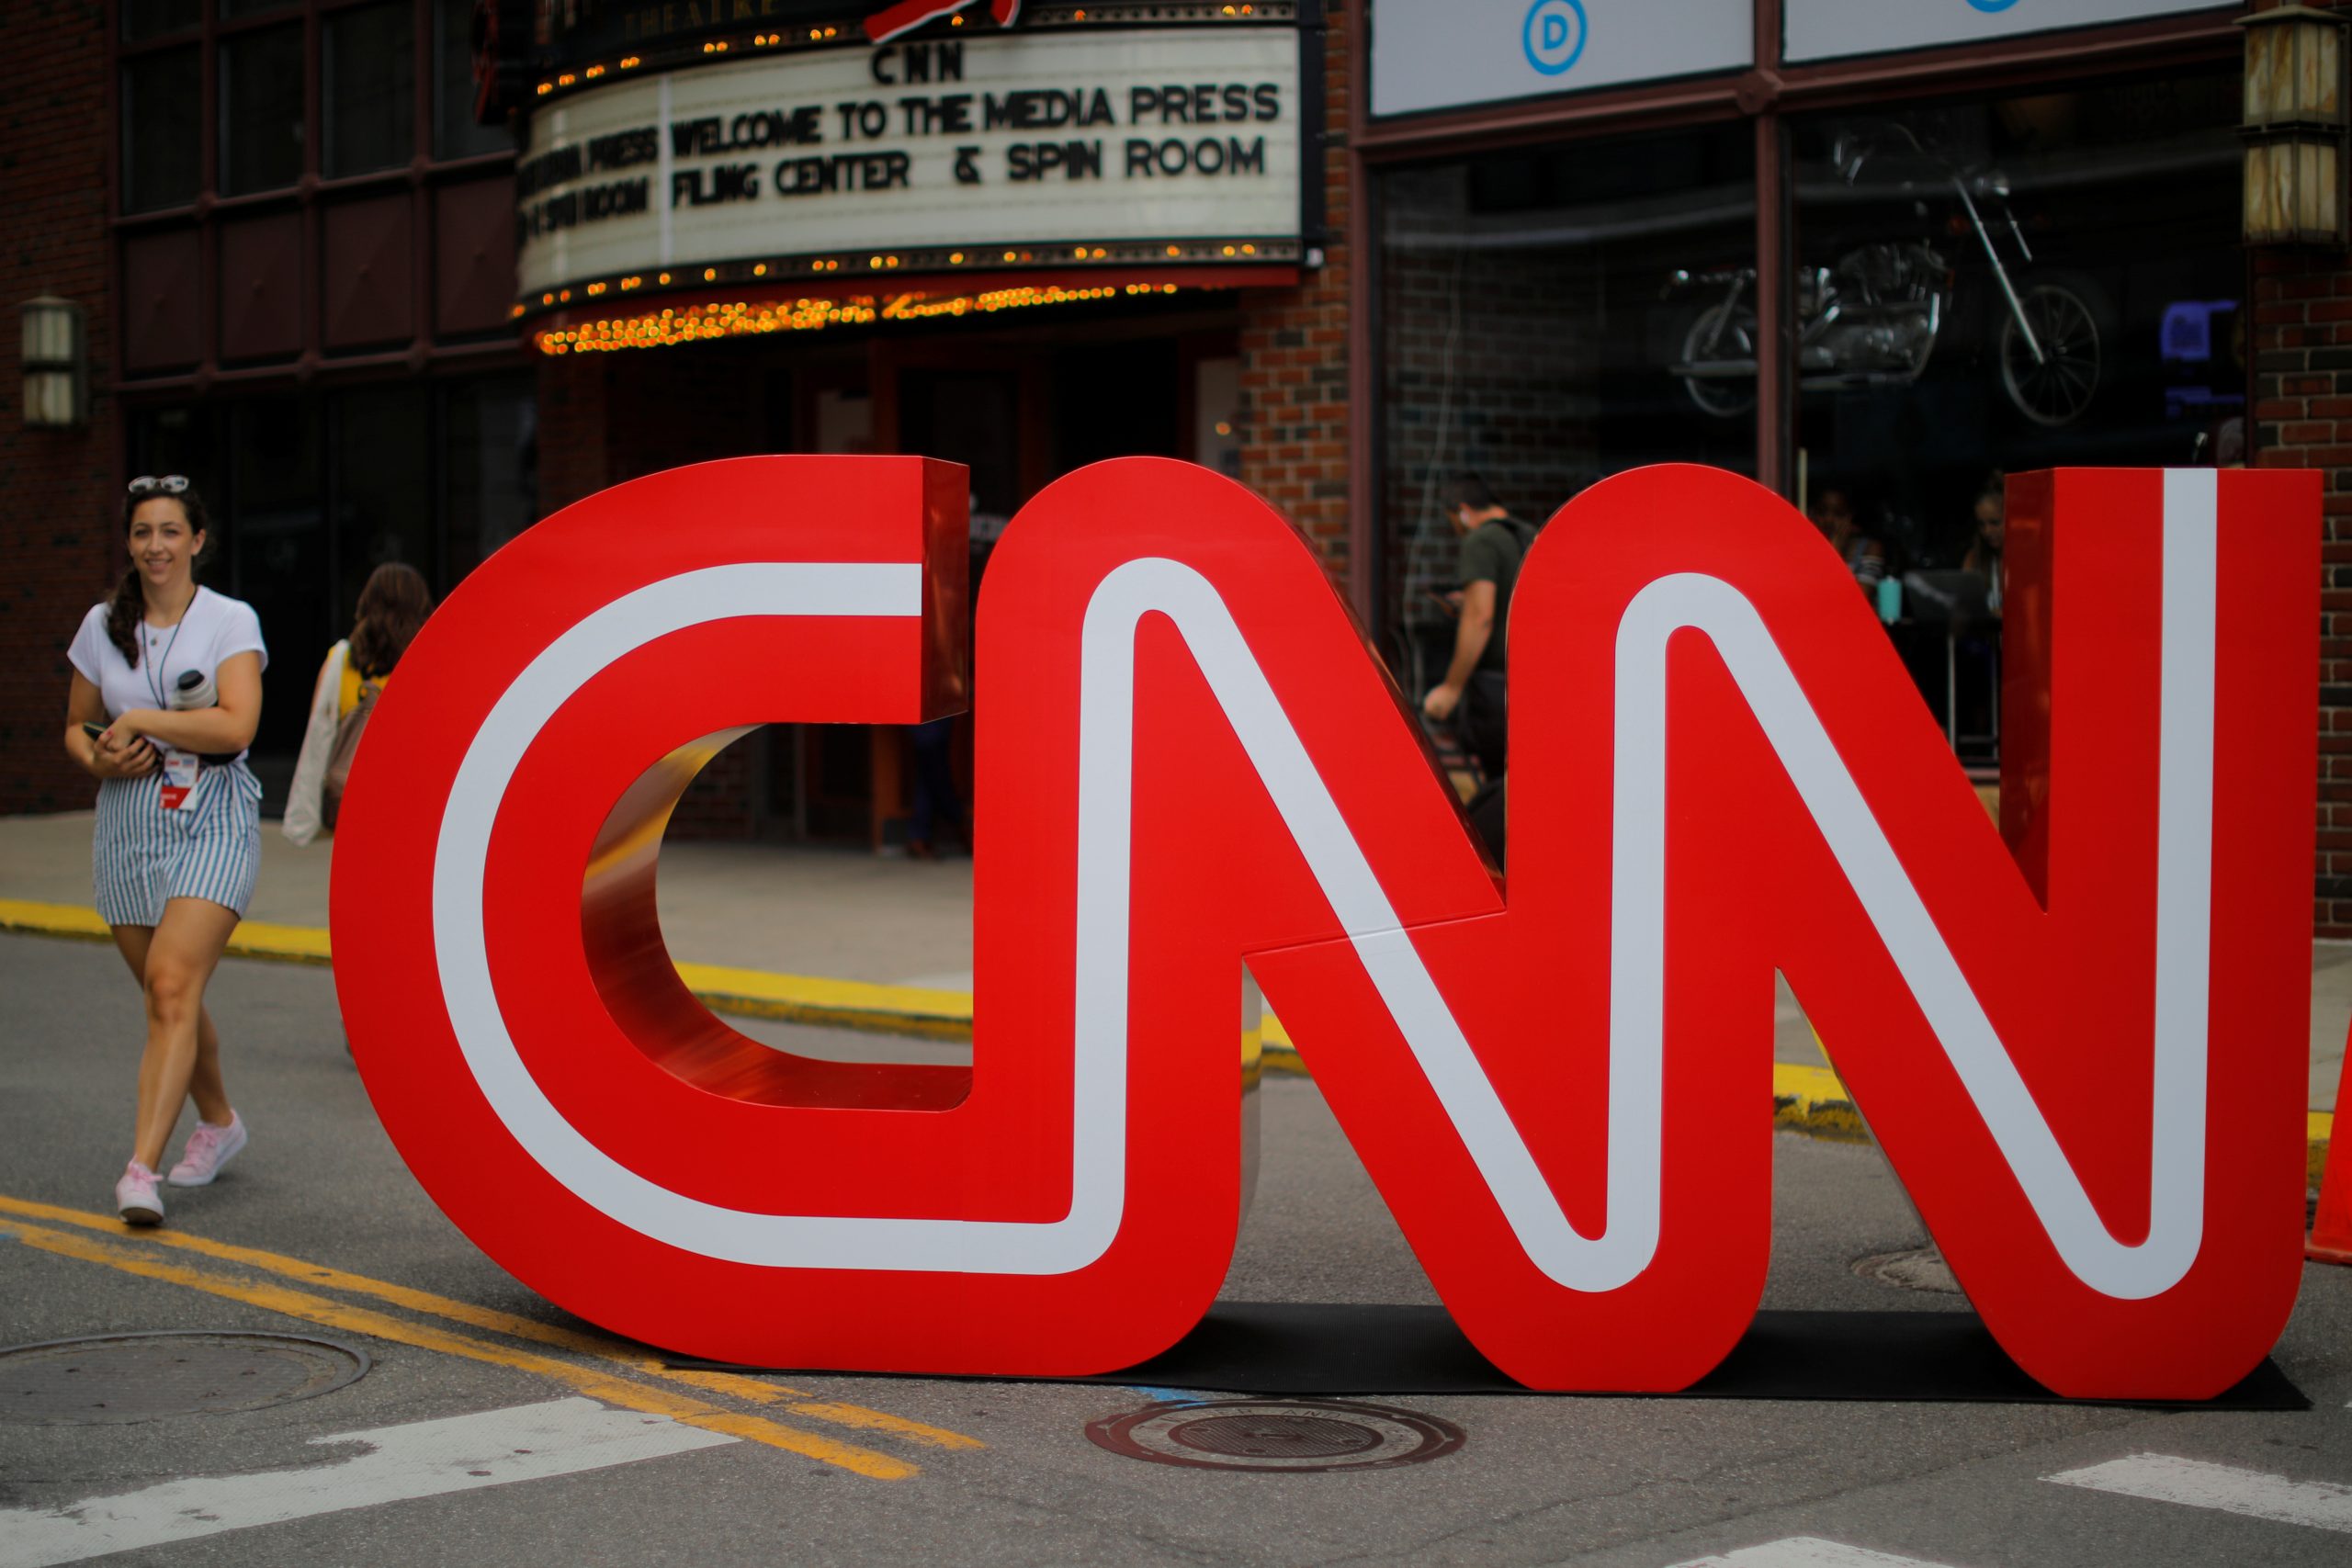 Cnn live. CNN логотип. Фото Ватикана с логотипом CNN. CNN 1/19/21.